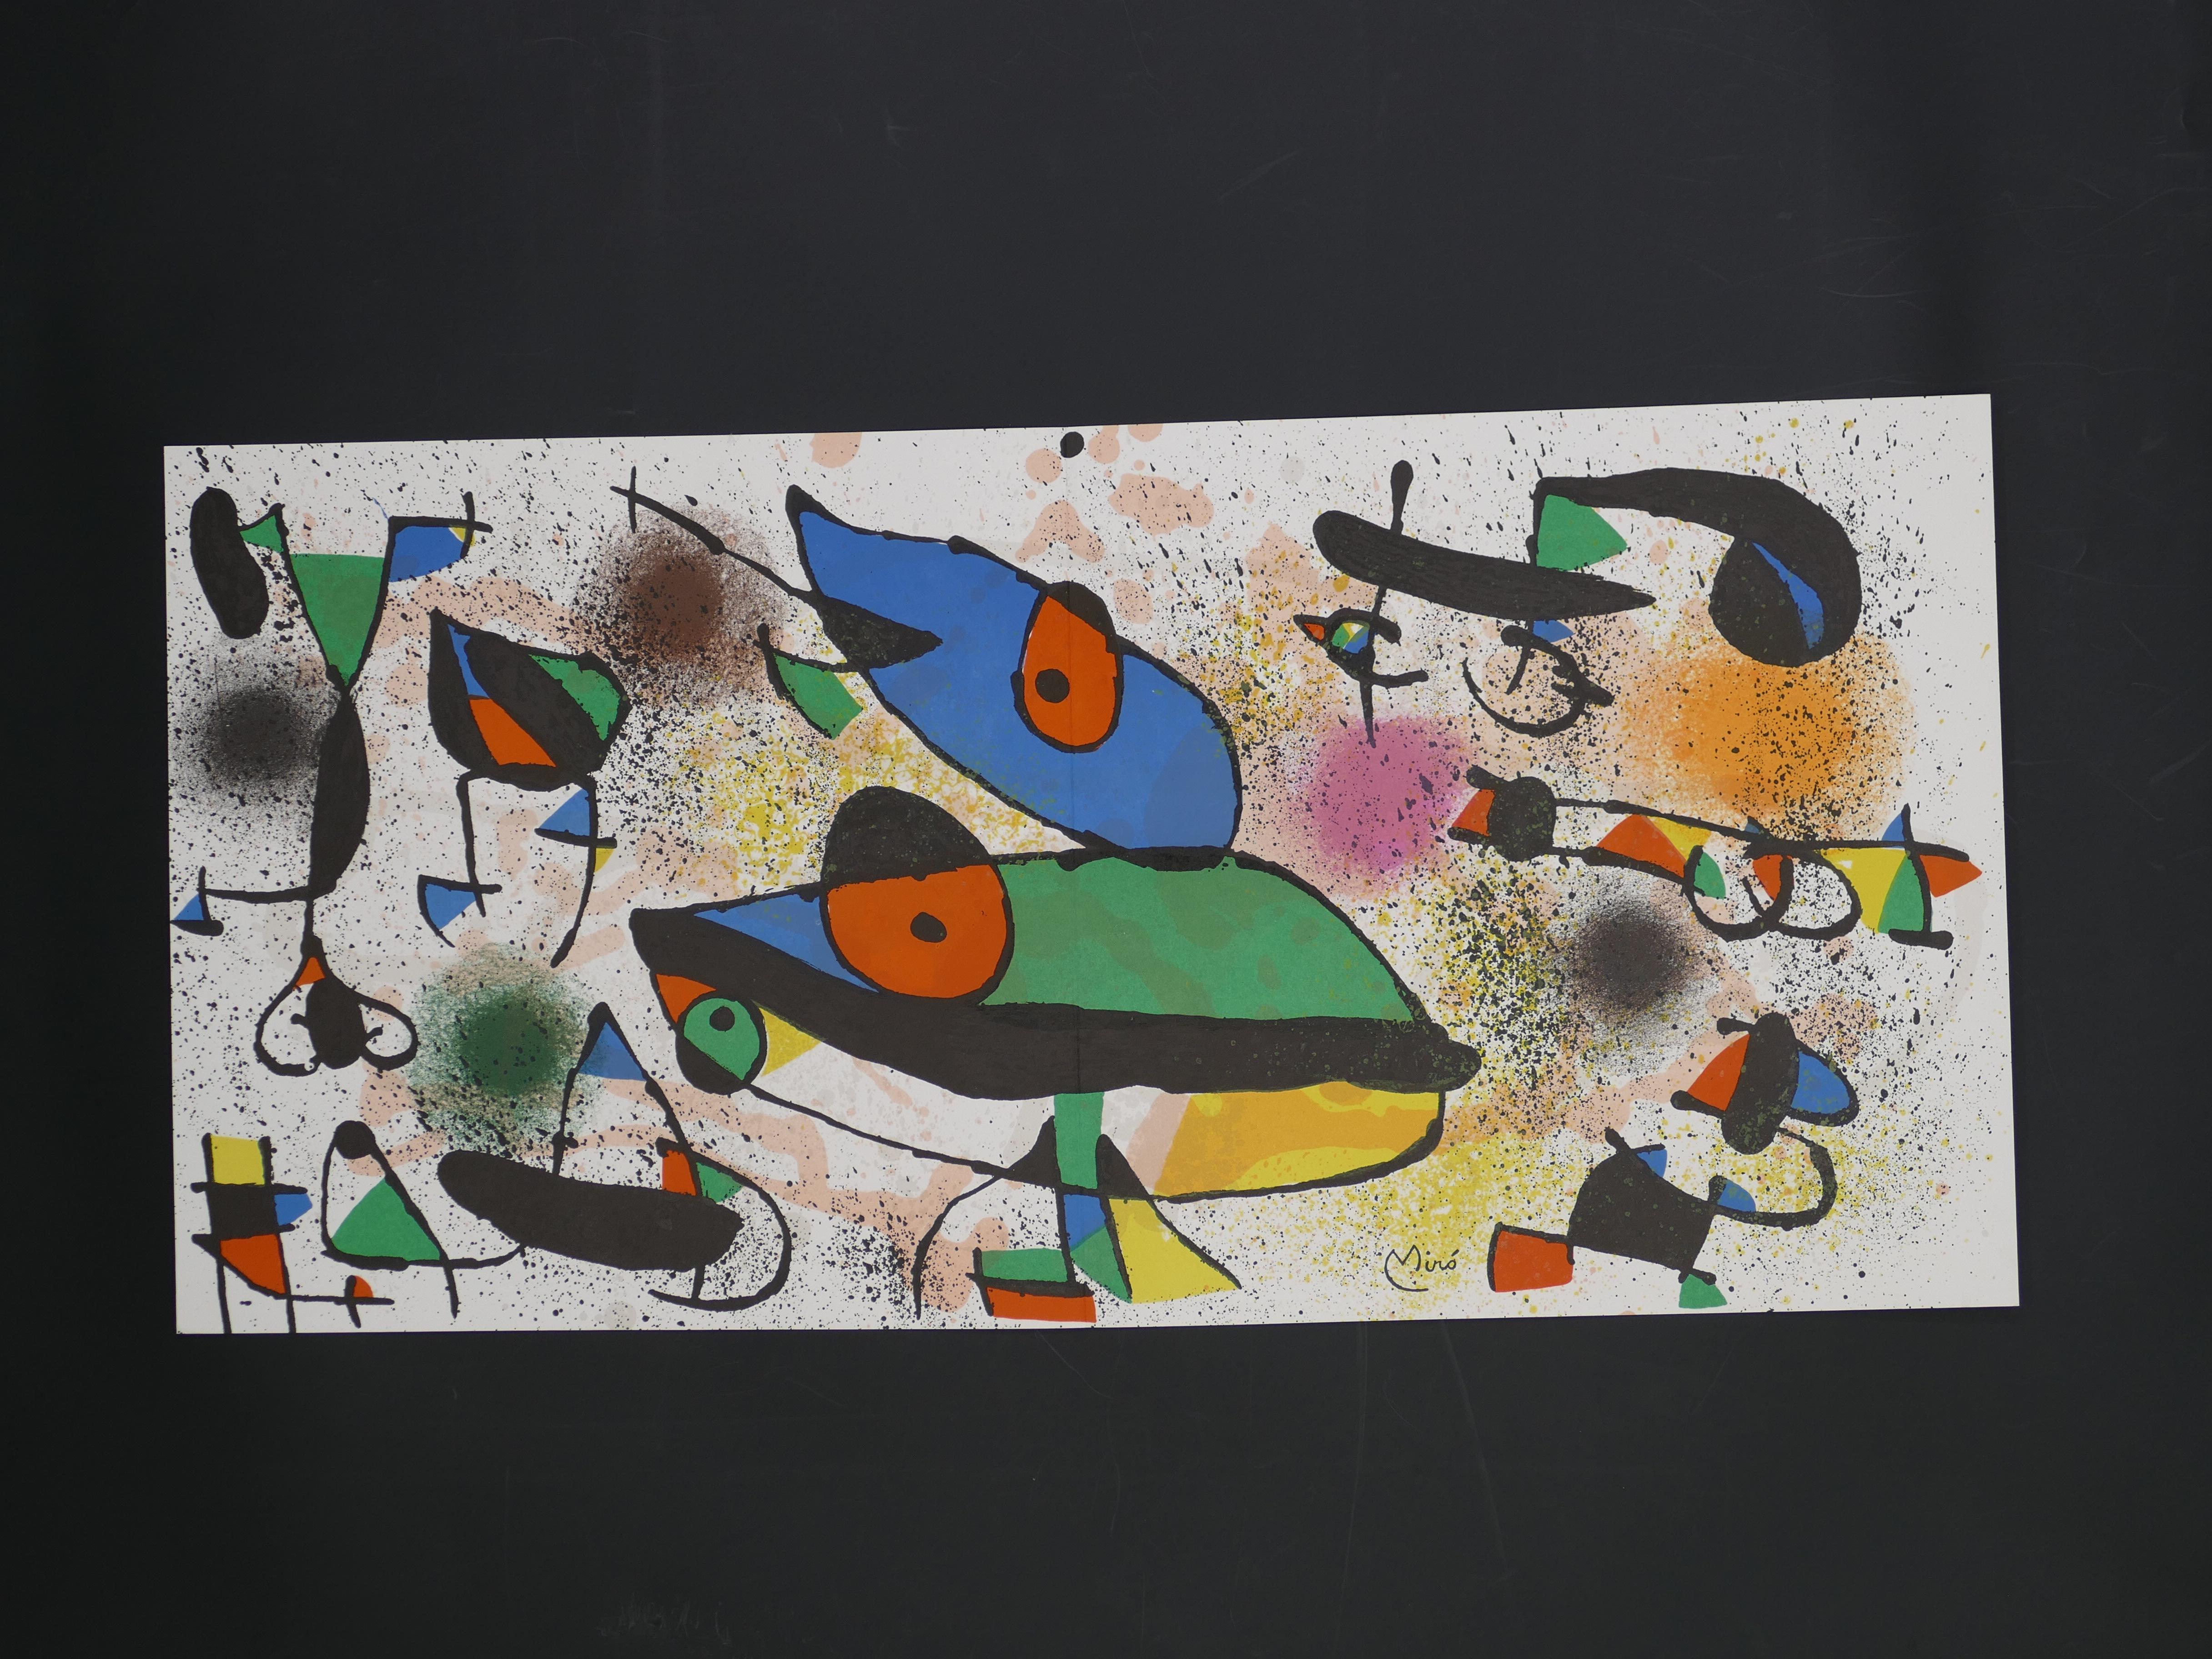 Sculptures - Original Lithograph by Joan Mirò - 1974 - Print by Joan Miró